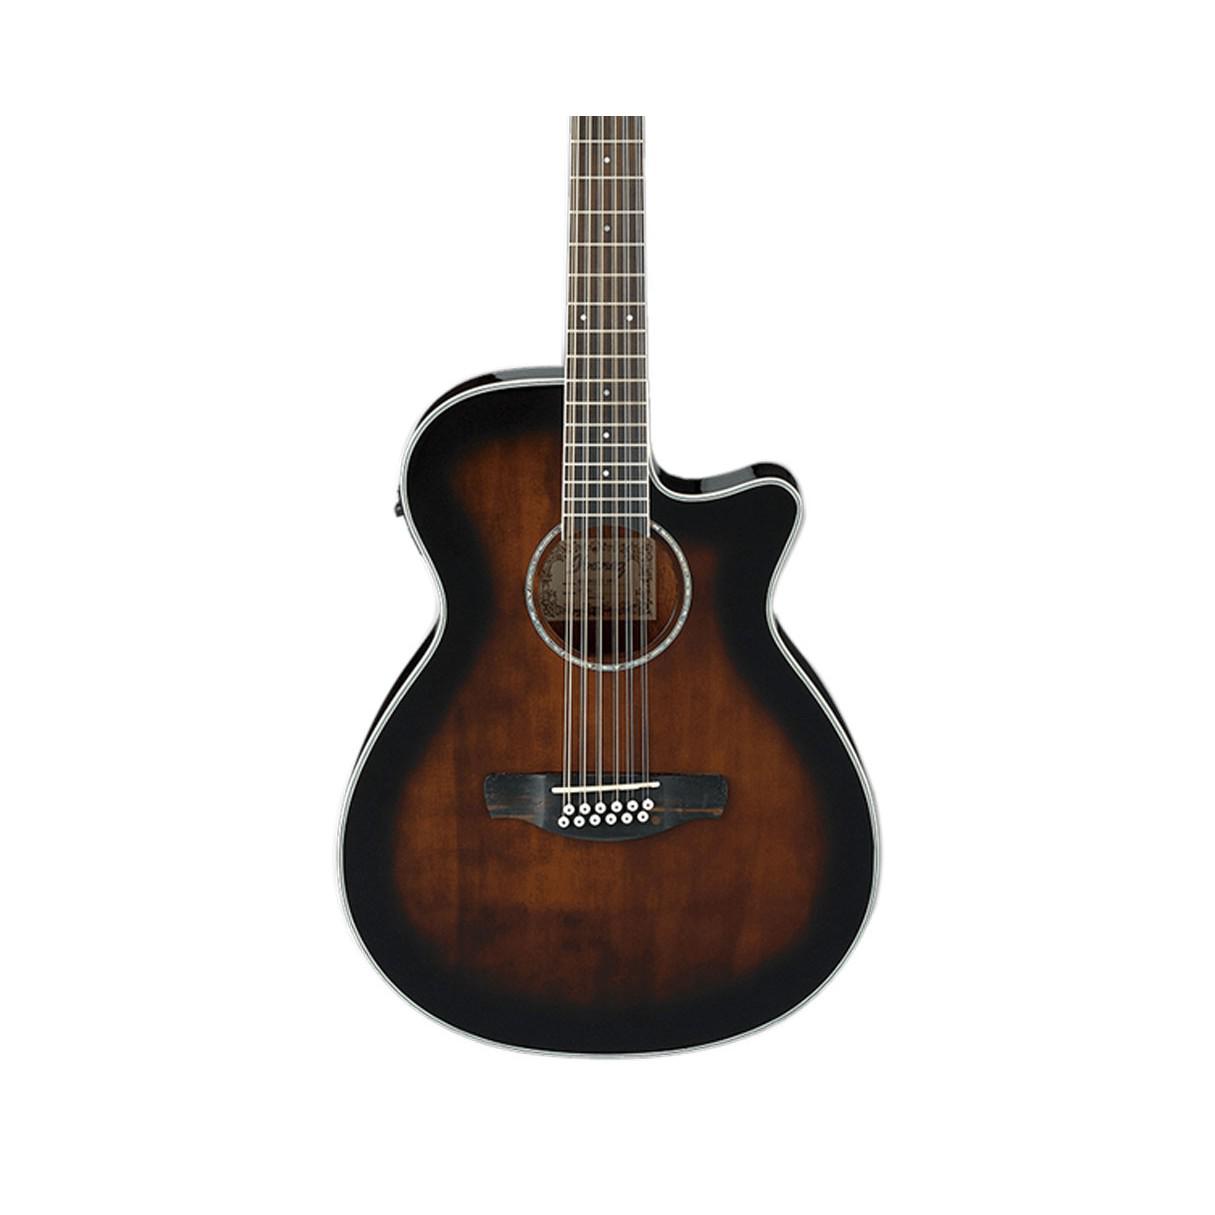 Ibañez - Guitarra Electroacústica AEG de 12 Cuerdas, Color: Caoba Mod.AEG1812II-DVS_108